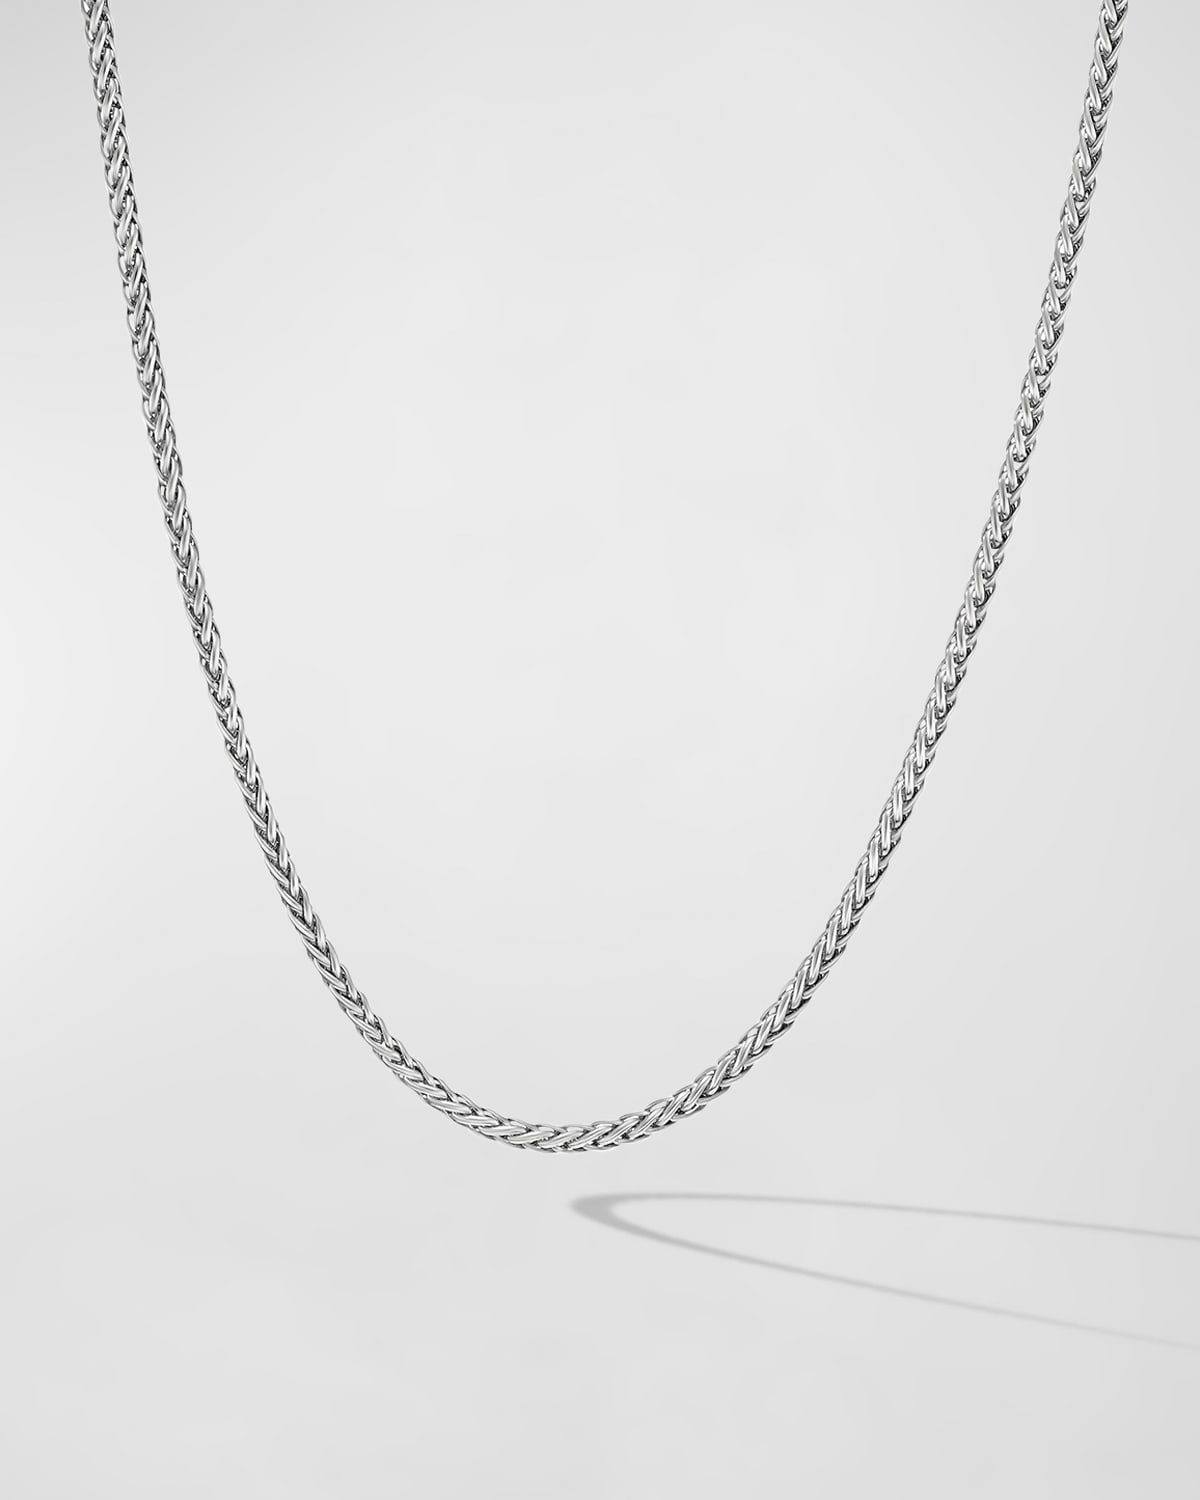 David Yurman Men's Wheat Chain Necklace in Silver, 2.5mm, 24"L